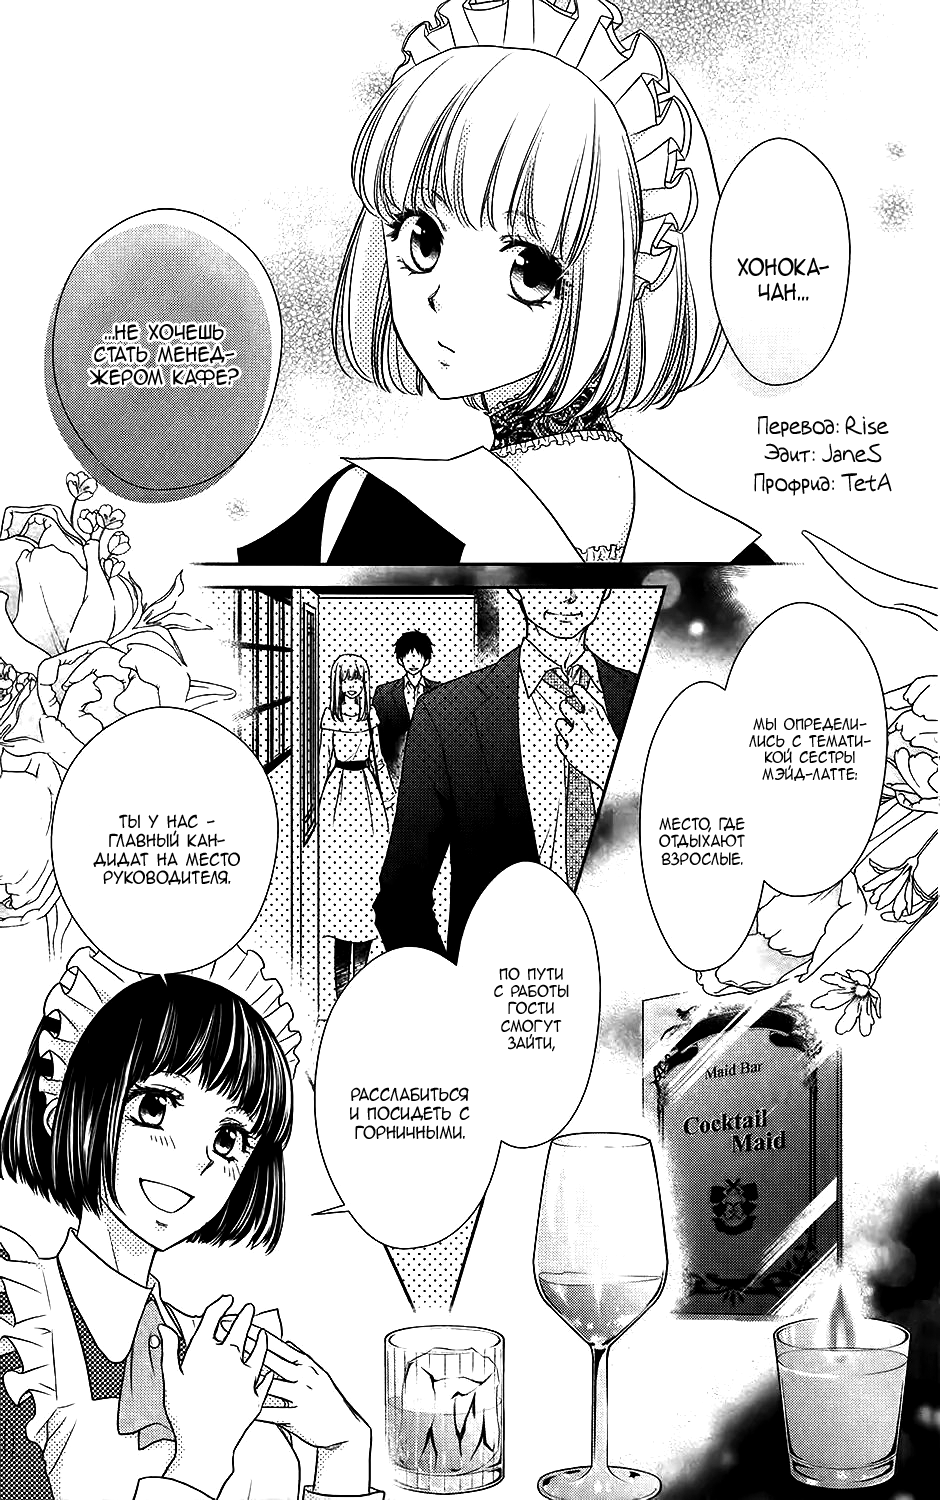 Манга моя новая горничная. Kaichou WA Maid-sama!: Marriage. Манга про президента. The Toy President Manga.